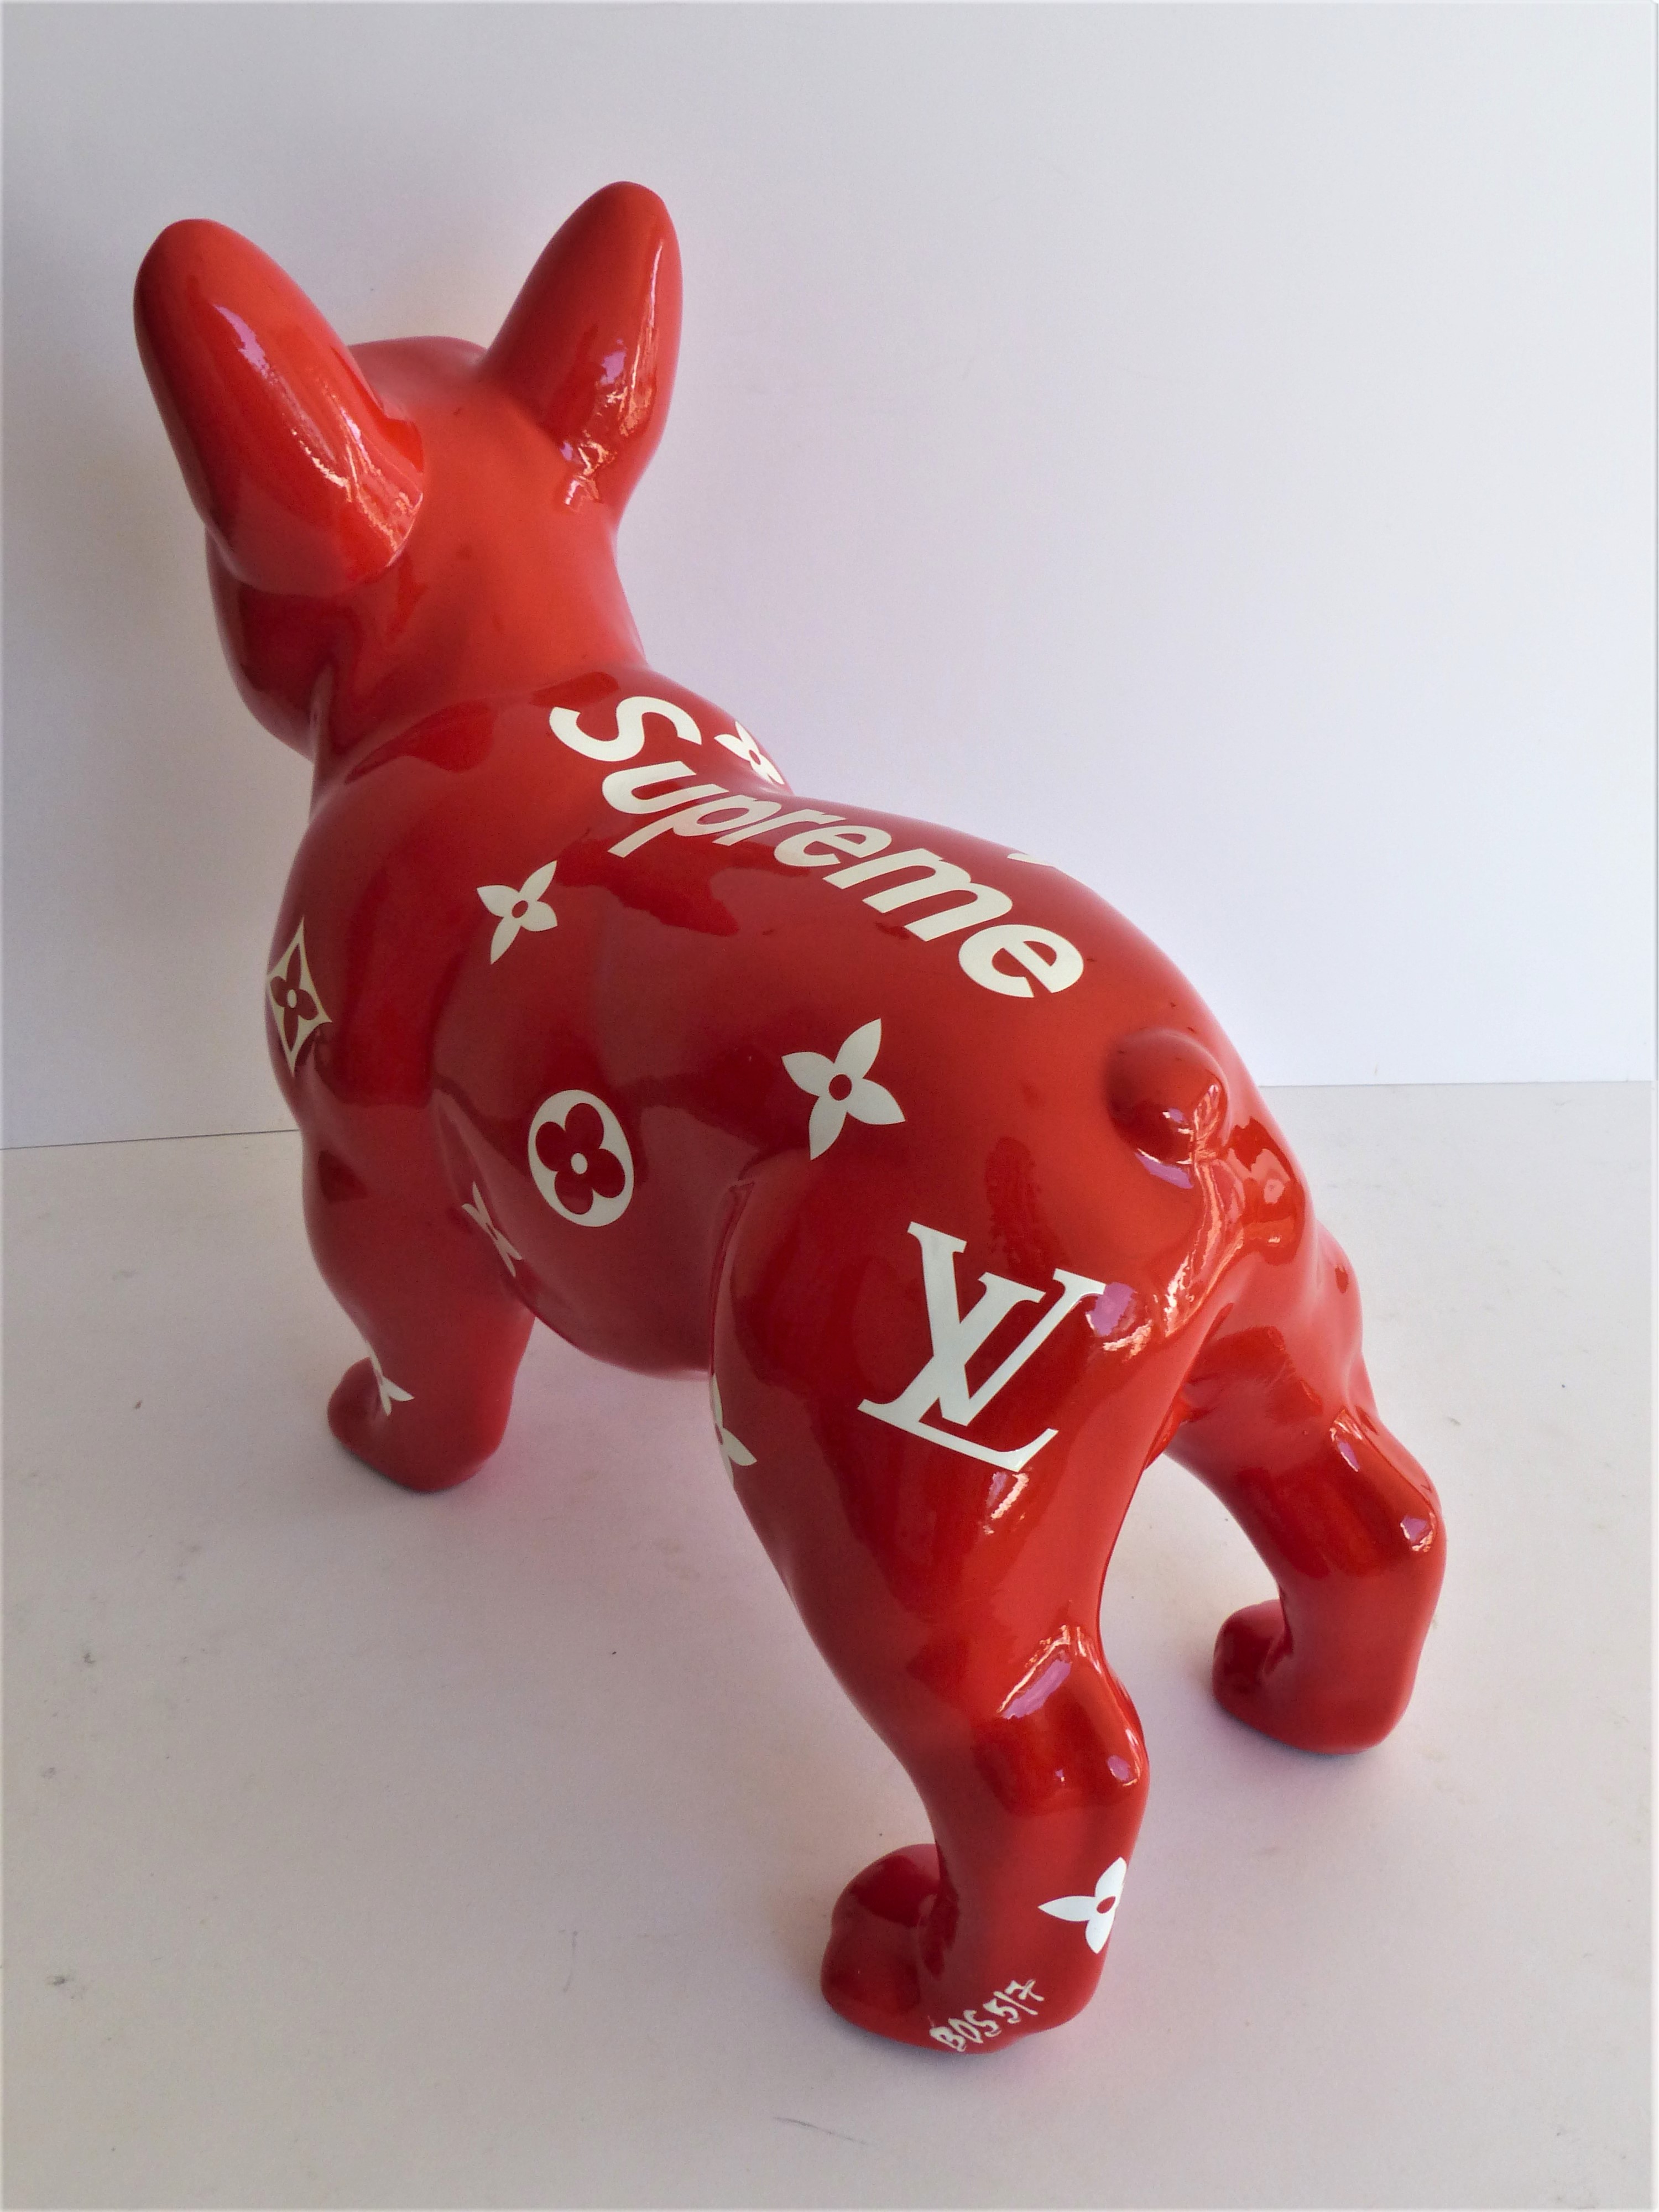 Patrick KONRAD - Louis Vuitton Bulldog - Sculpture - Revelations